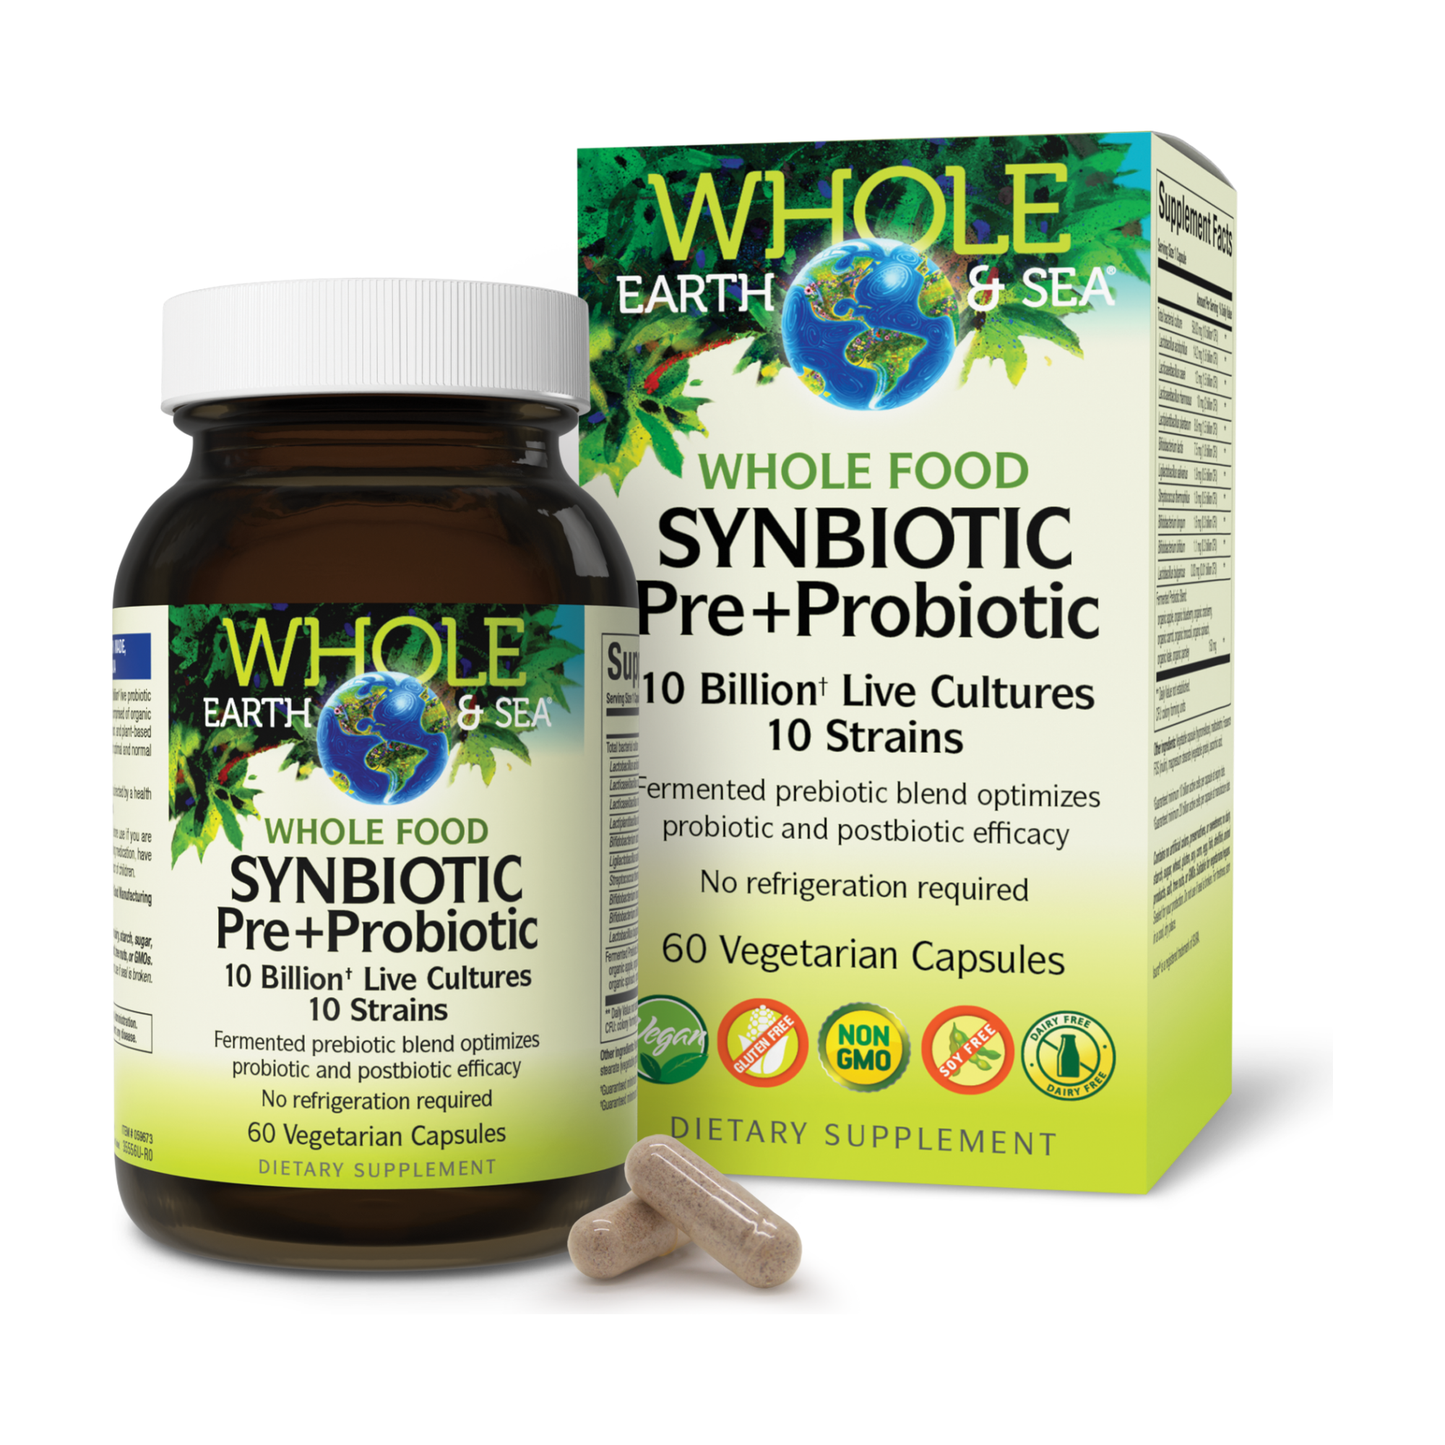 Whole Food Synbiotic Pre+Probiotic 10 Billion for Whole Earth & Sea® |variant|hi-res|35556U